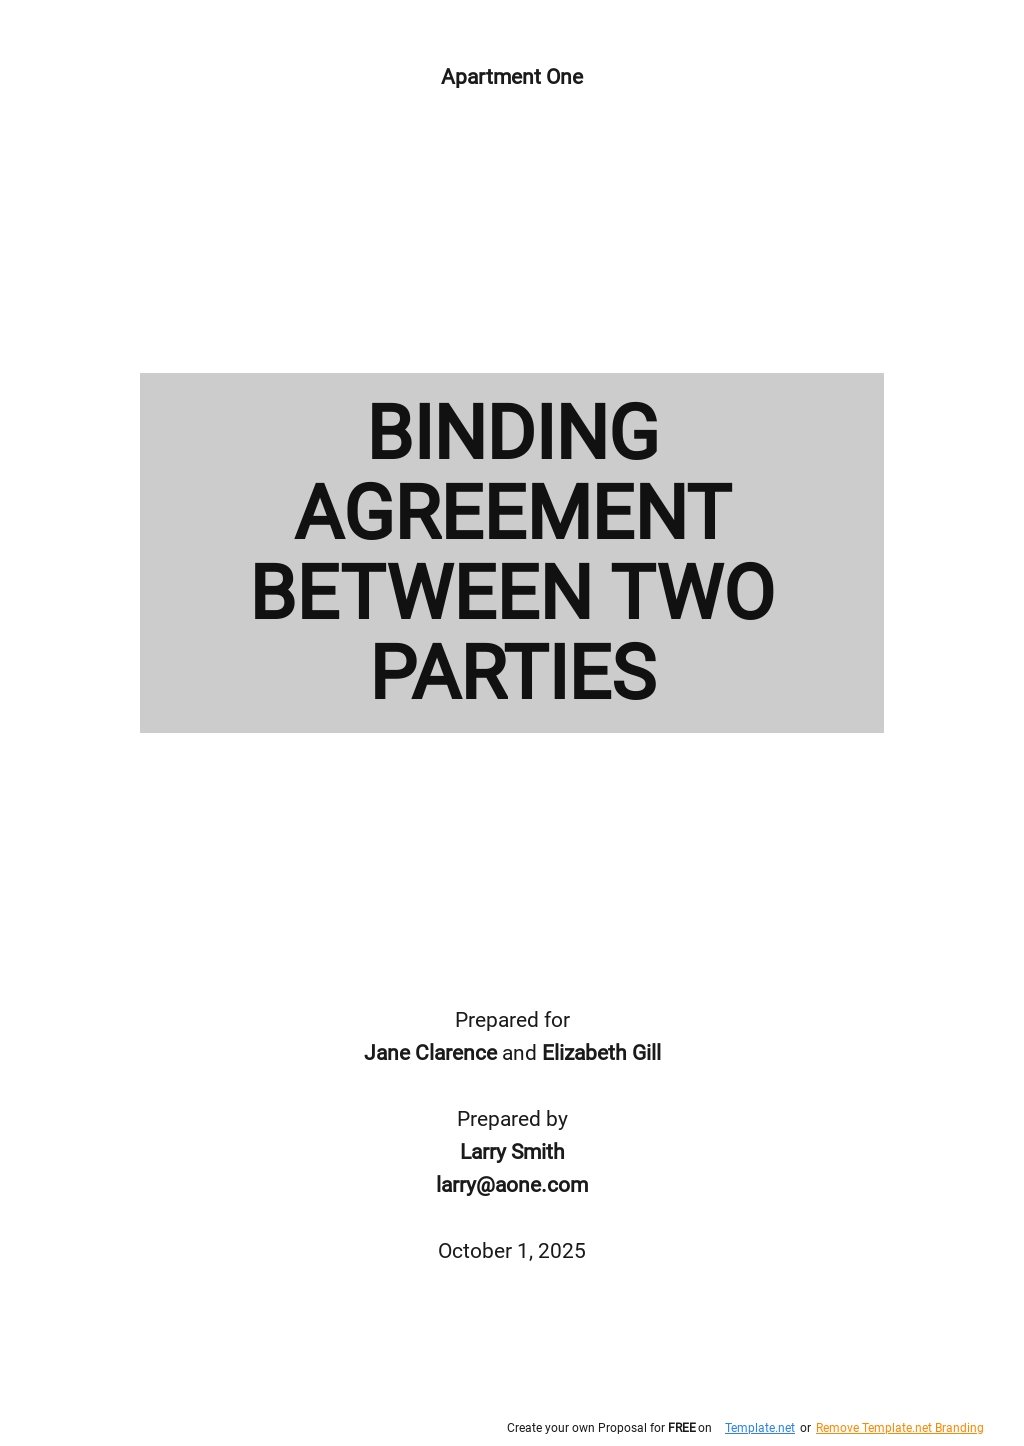 Free Binding Agreement Between Two Parties Template.jpe